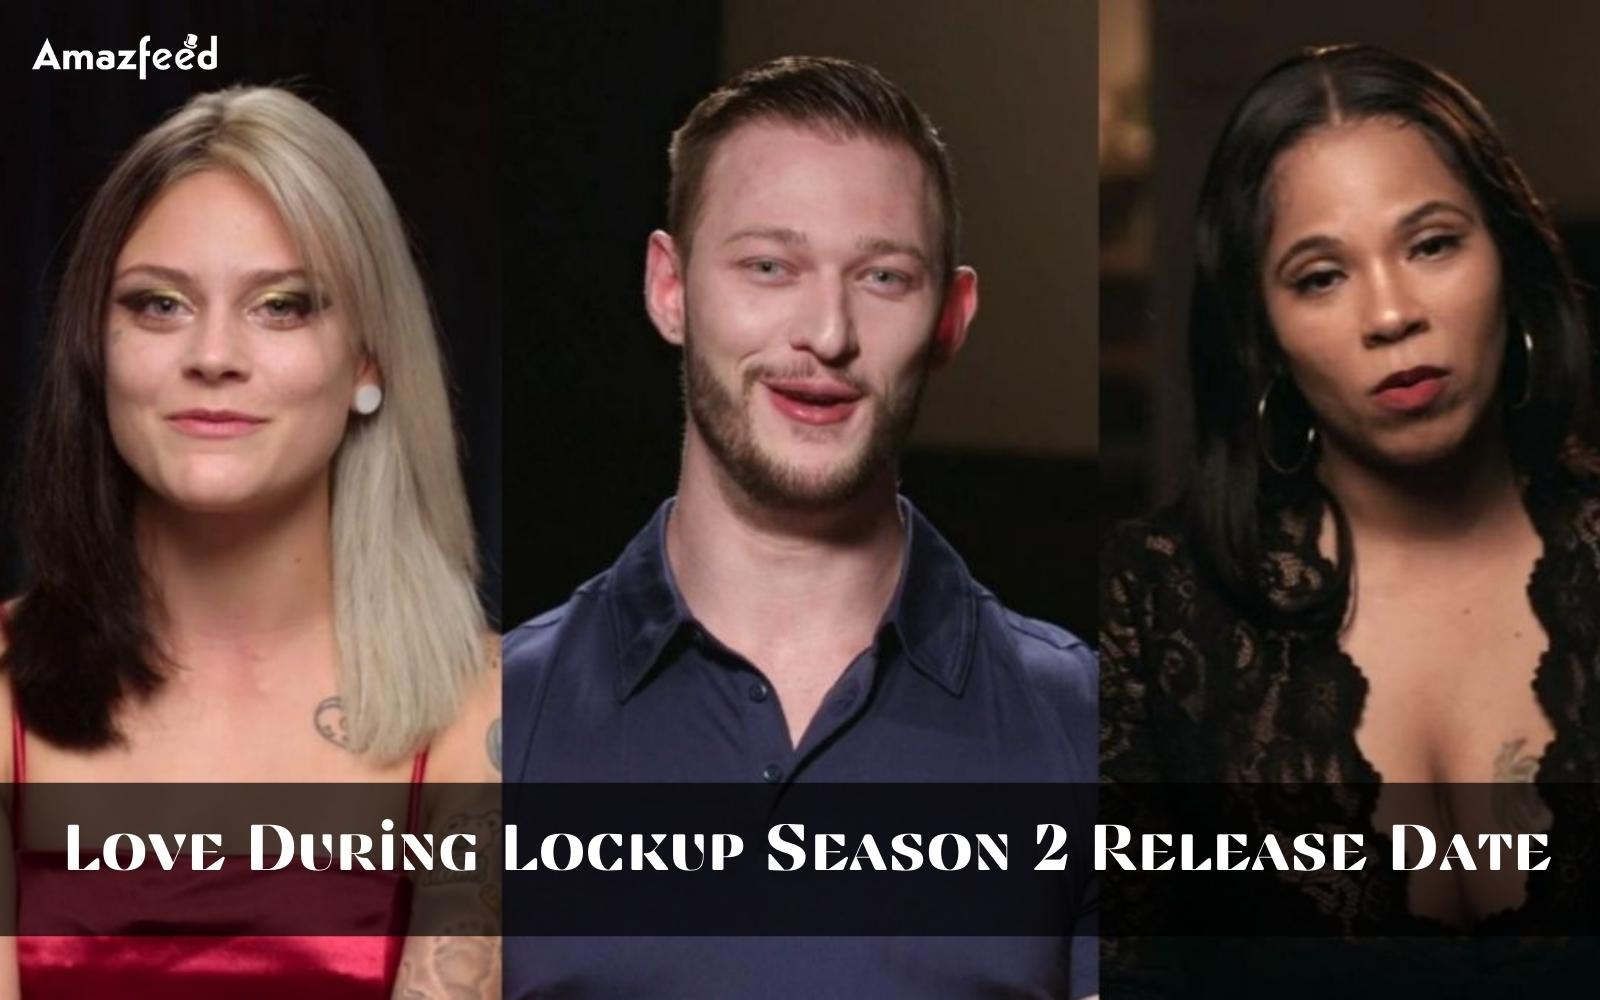 Love during lockup season 2 release date